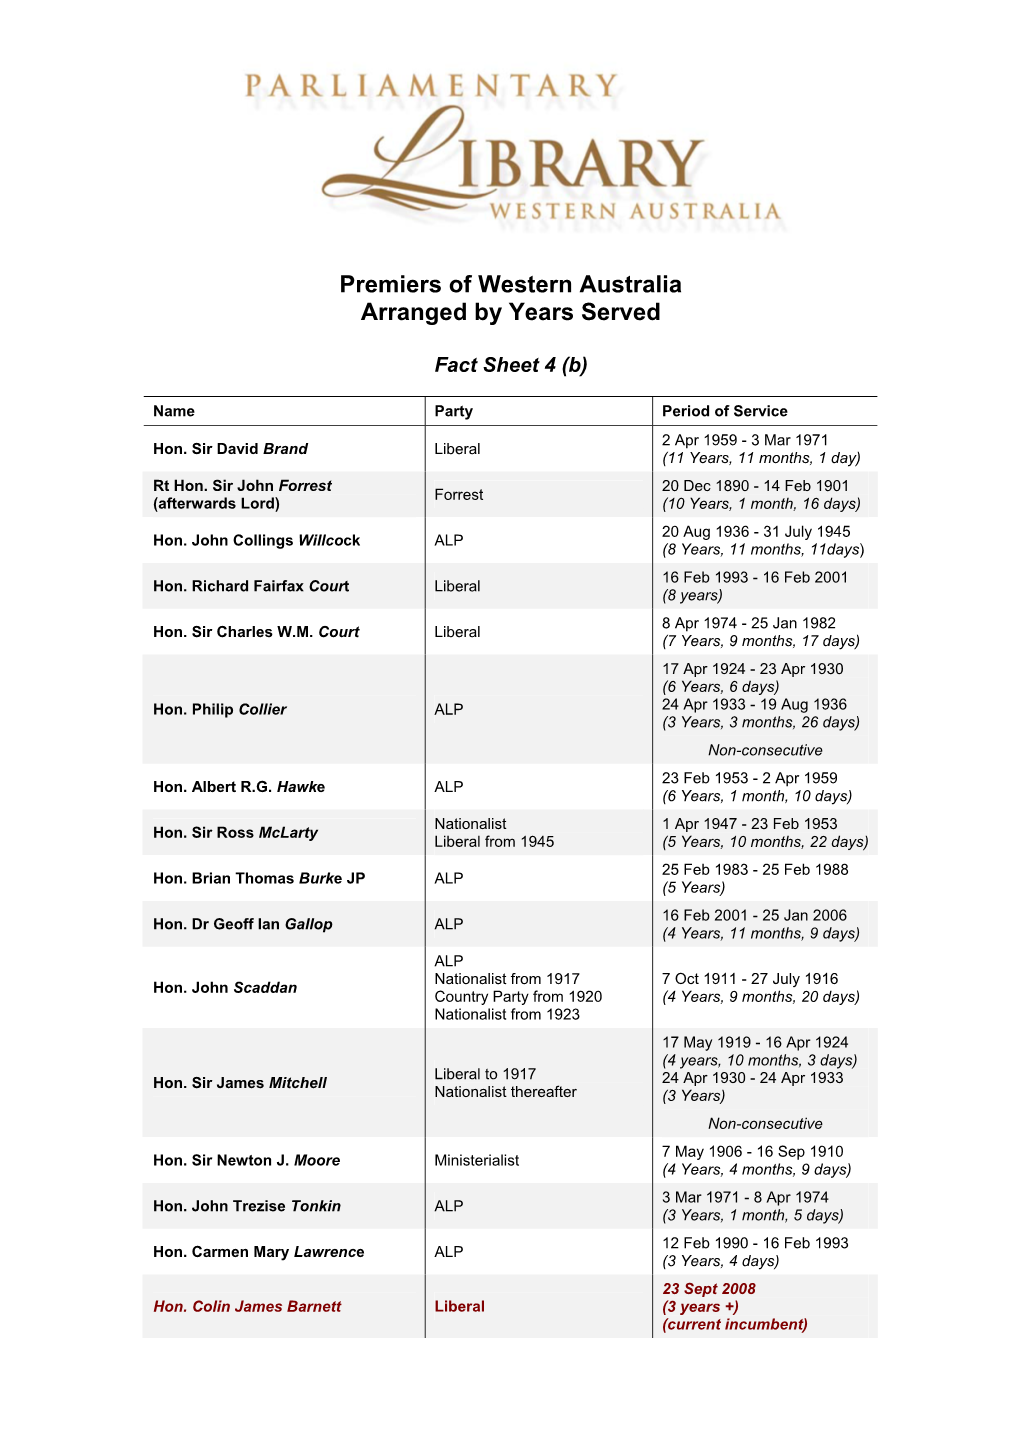 Premiers of Western Australia Arranged by Years Served